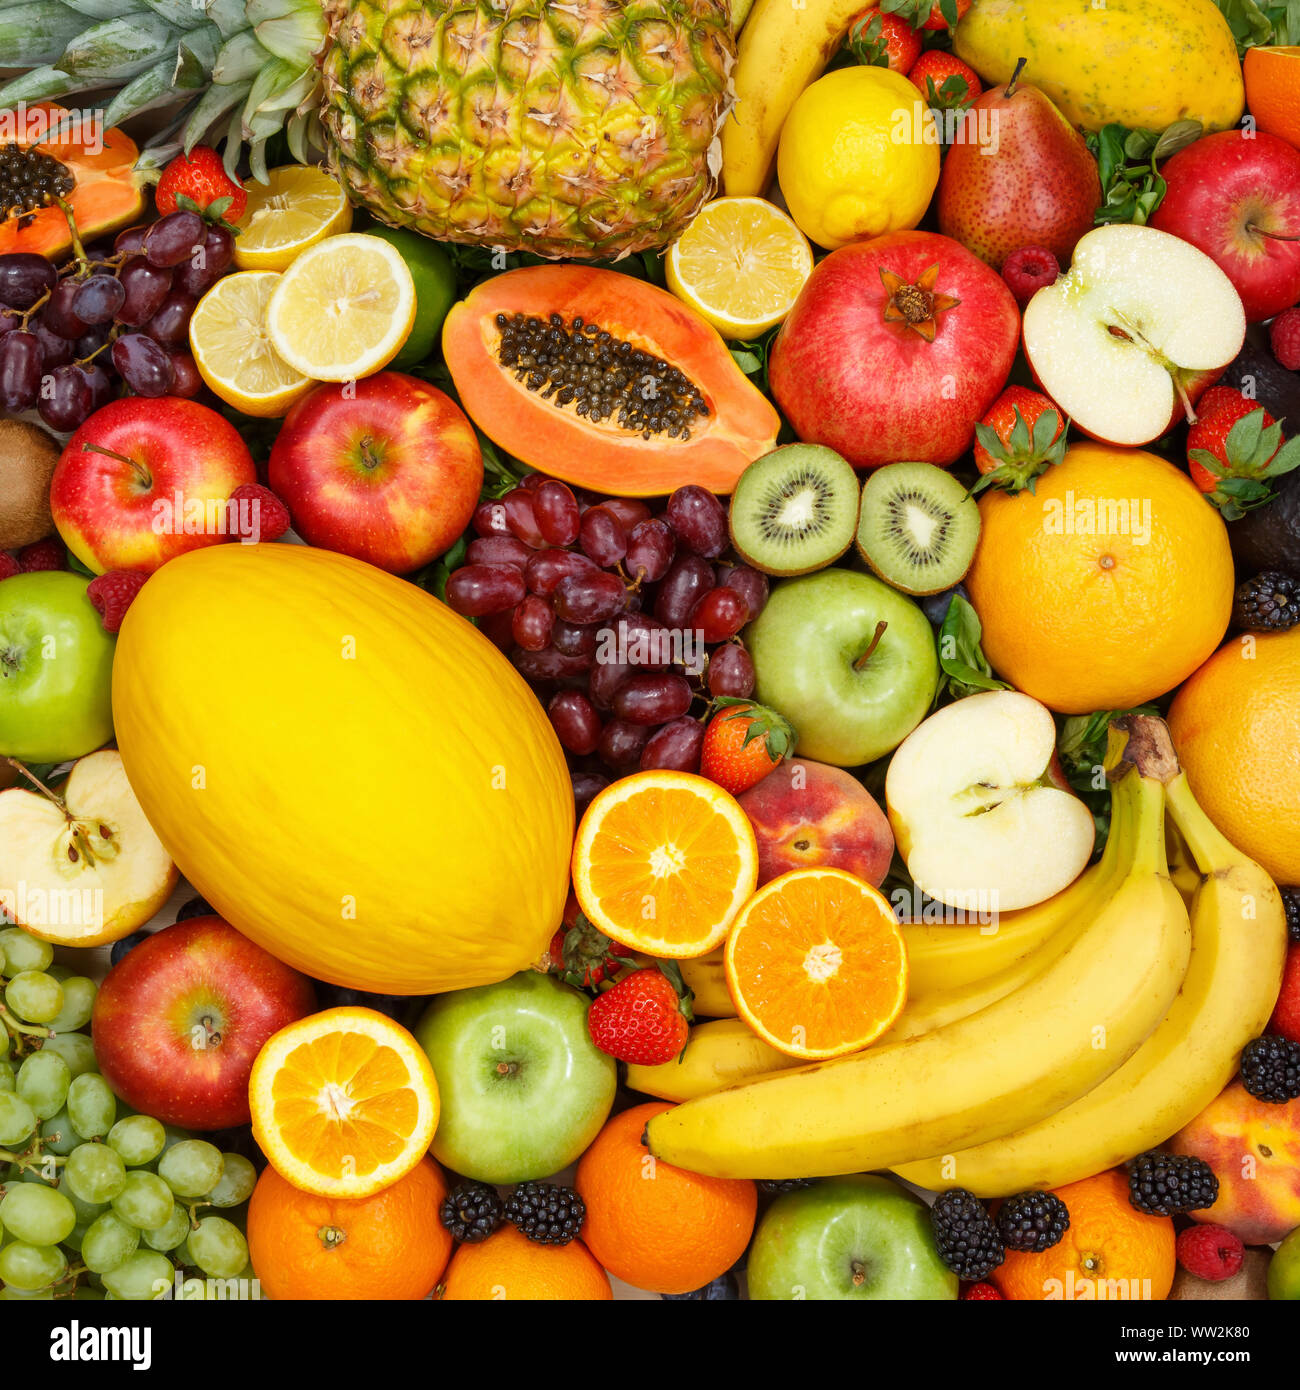 square fruits